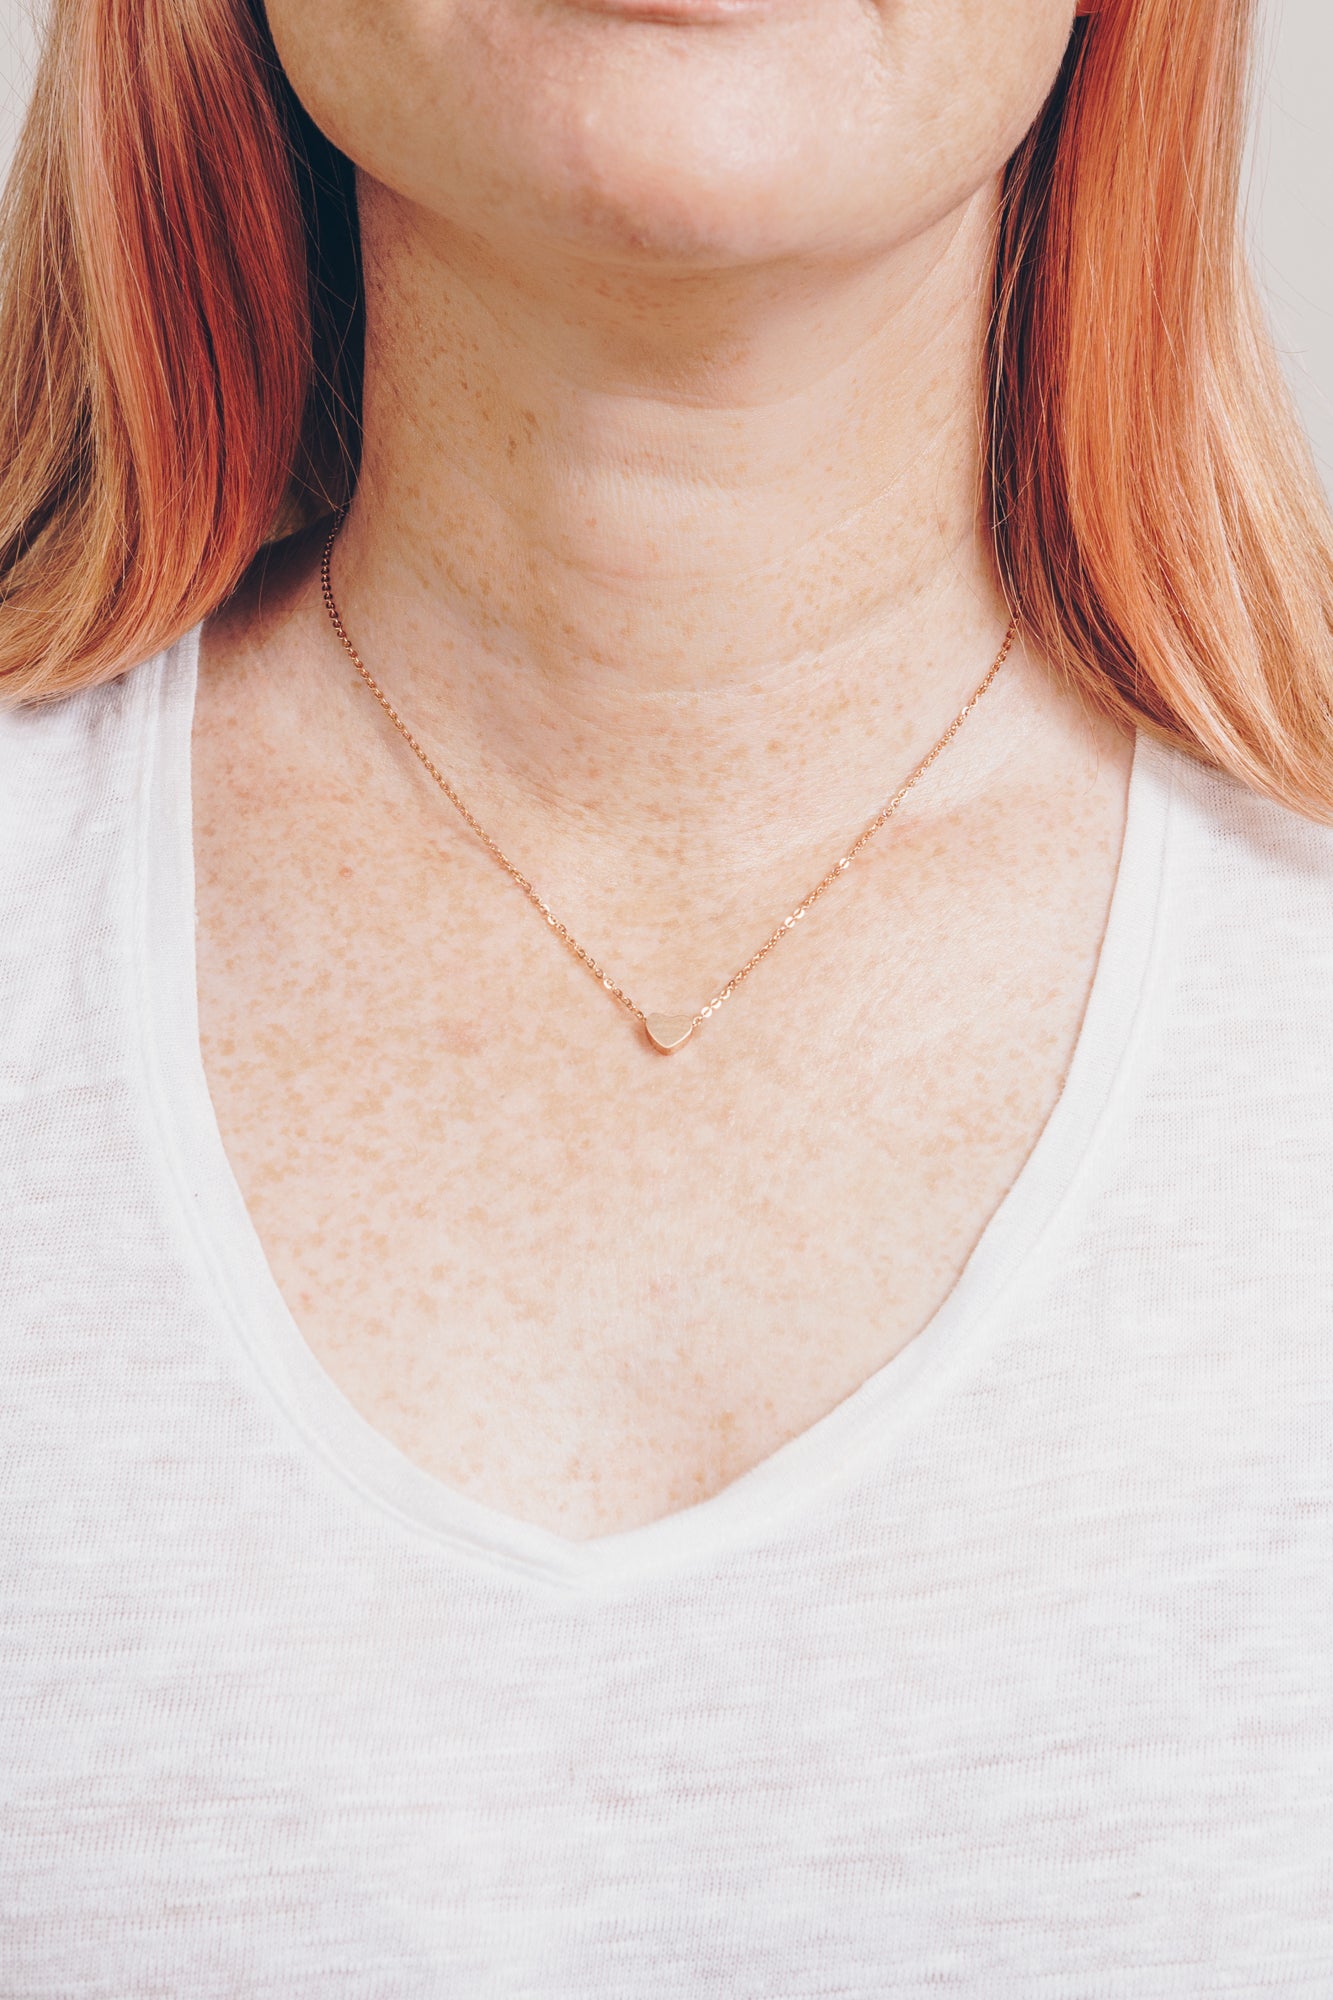 rose gold heart necklace on model